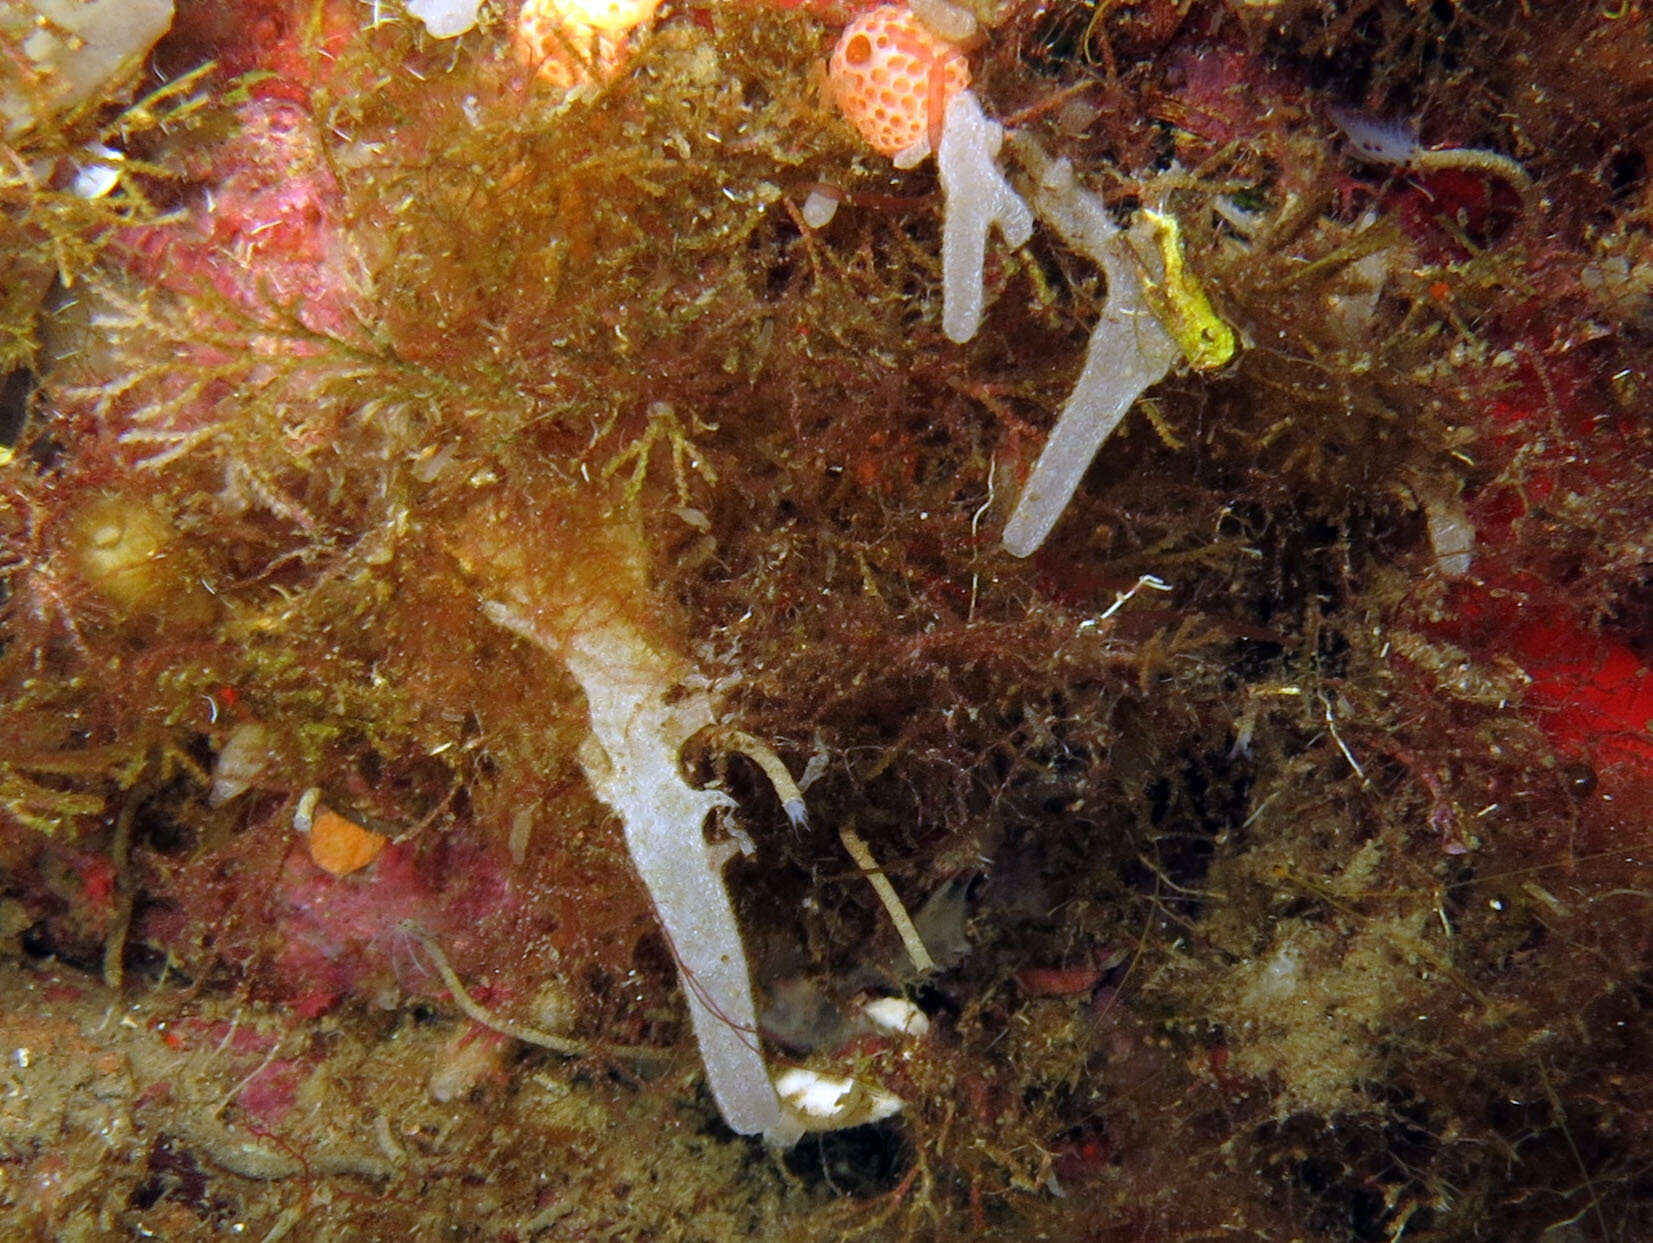 Image of calcareous tube-sponge